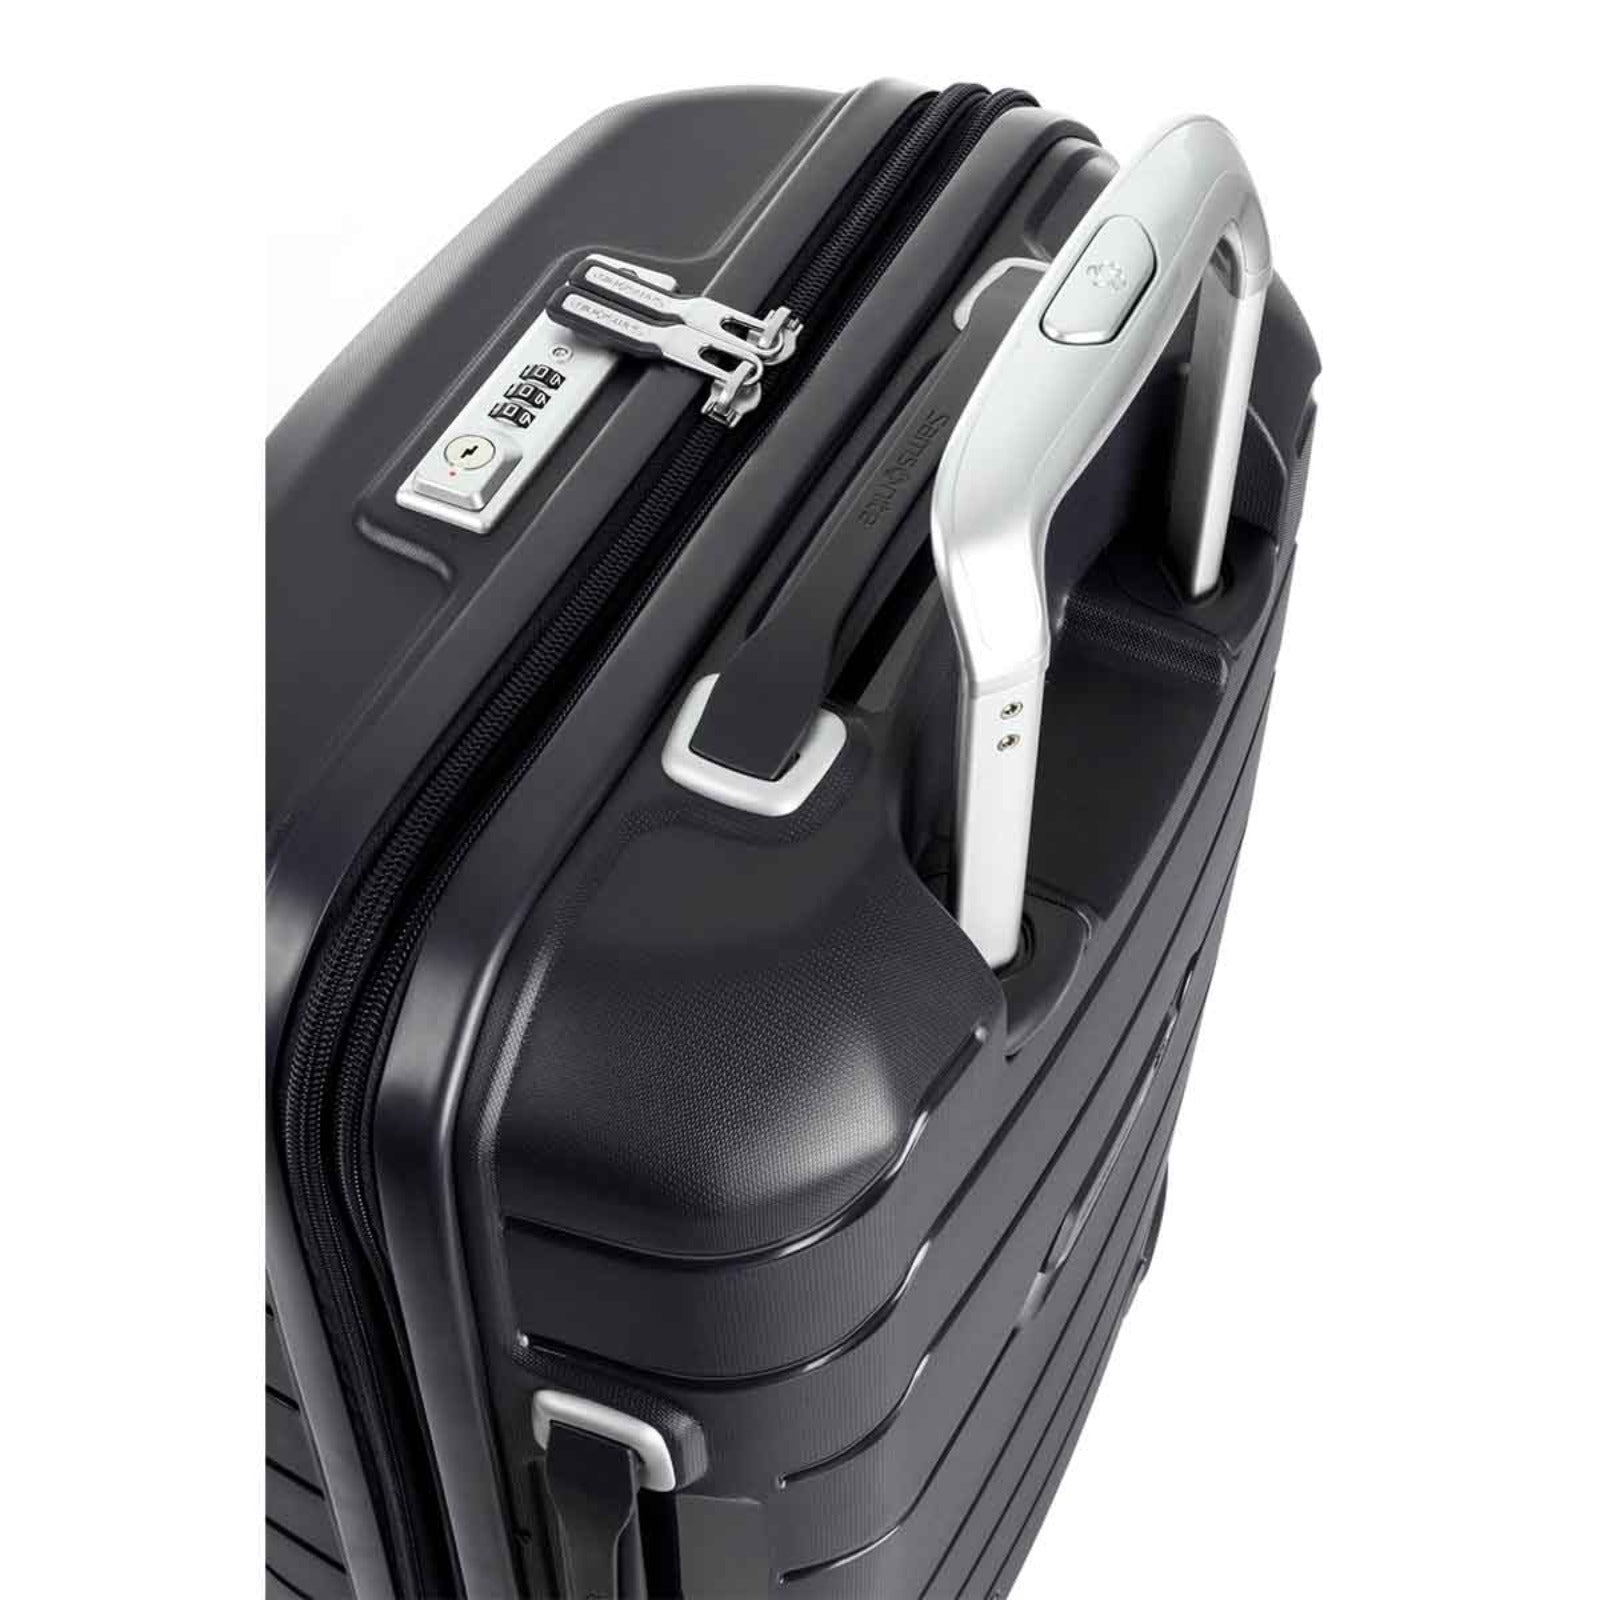 Samsonite_Oc2lite_55cm_Carry-On_Suitcase_Black_Trolley_Handle_Lock